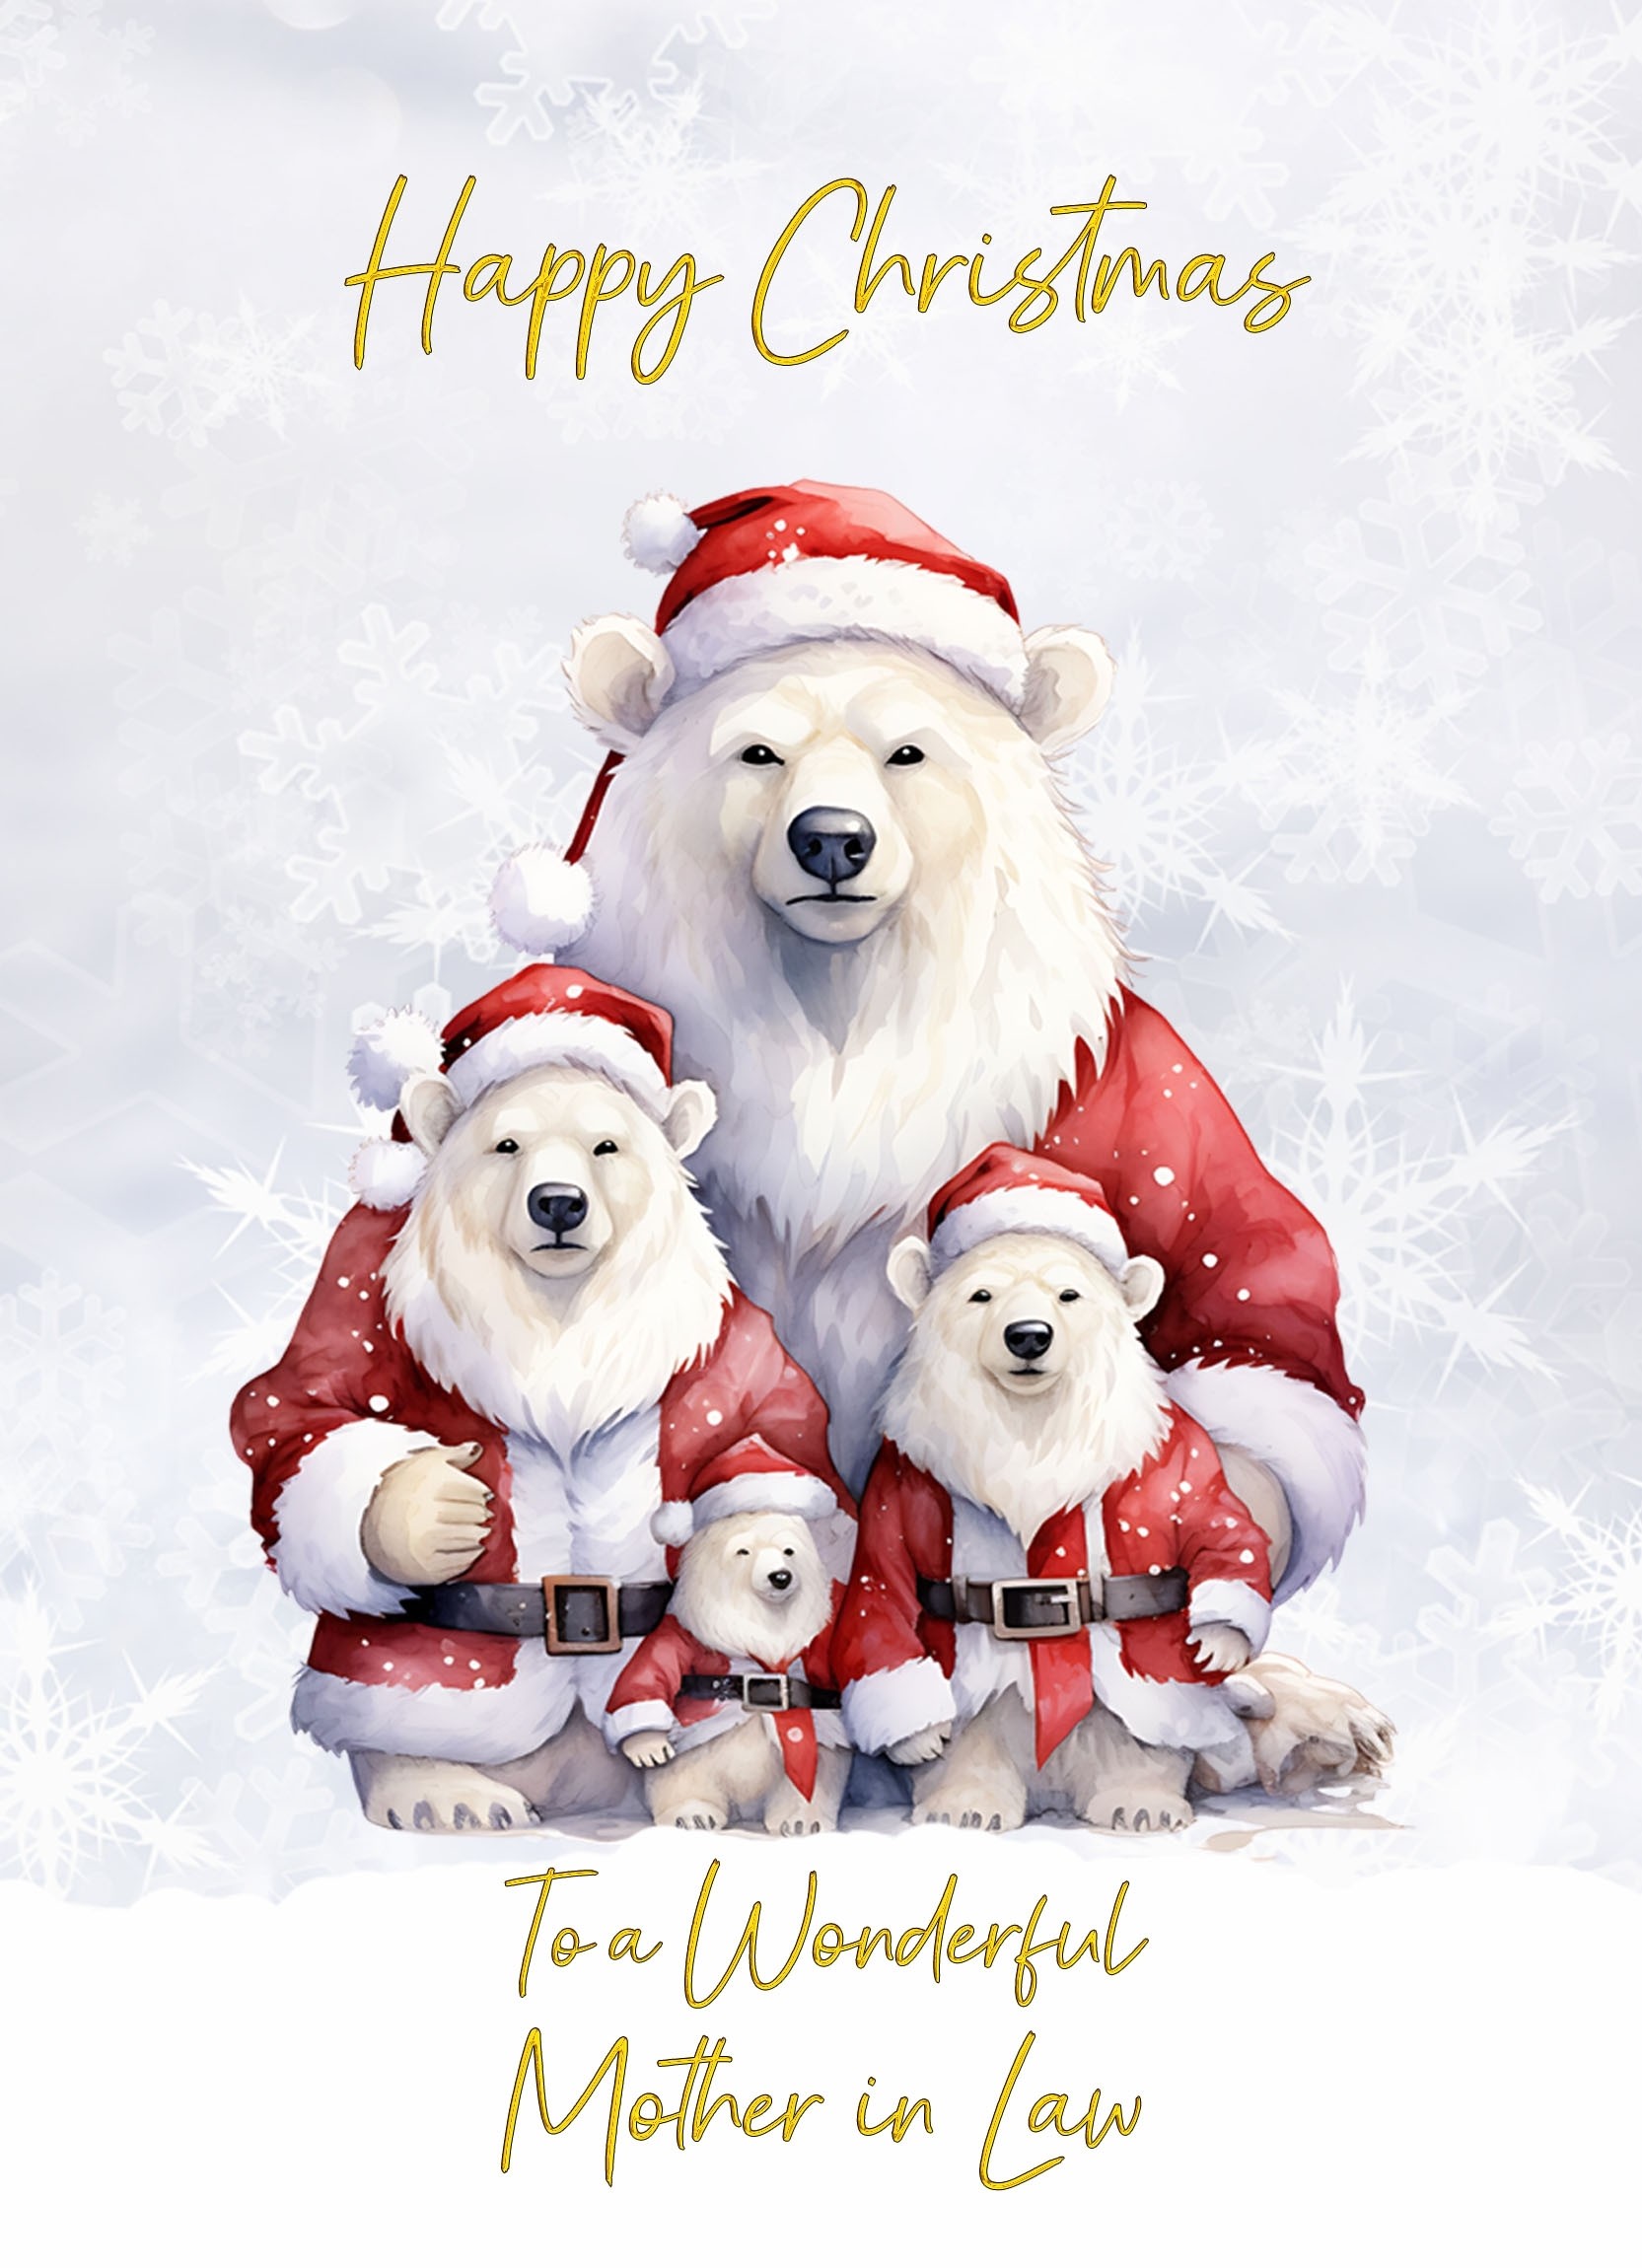 Christmas Card For Mother in Law (Polar Bear Family Art)